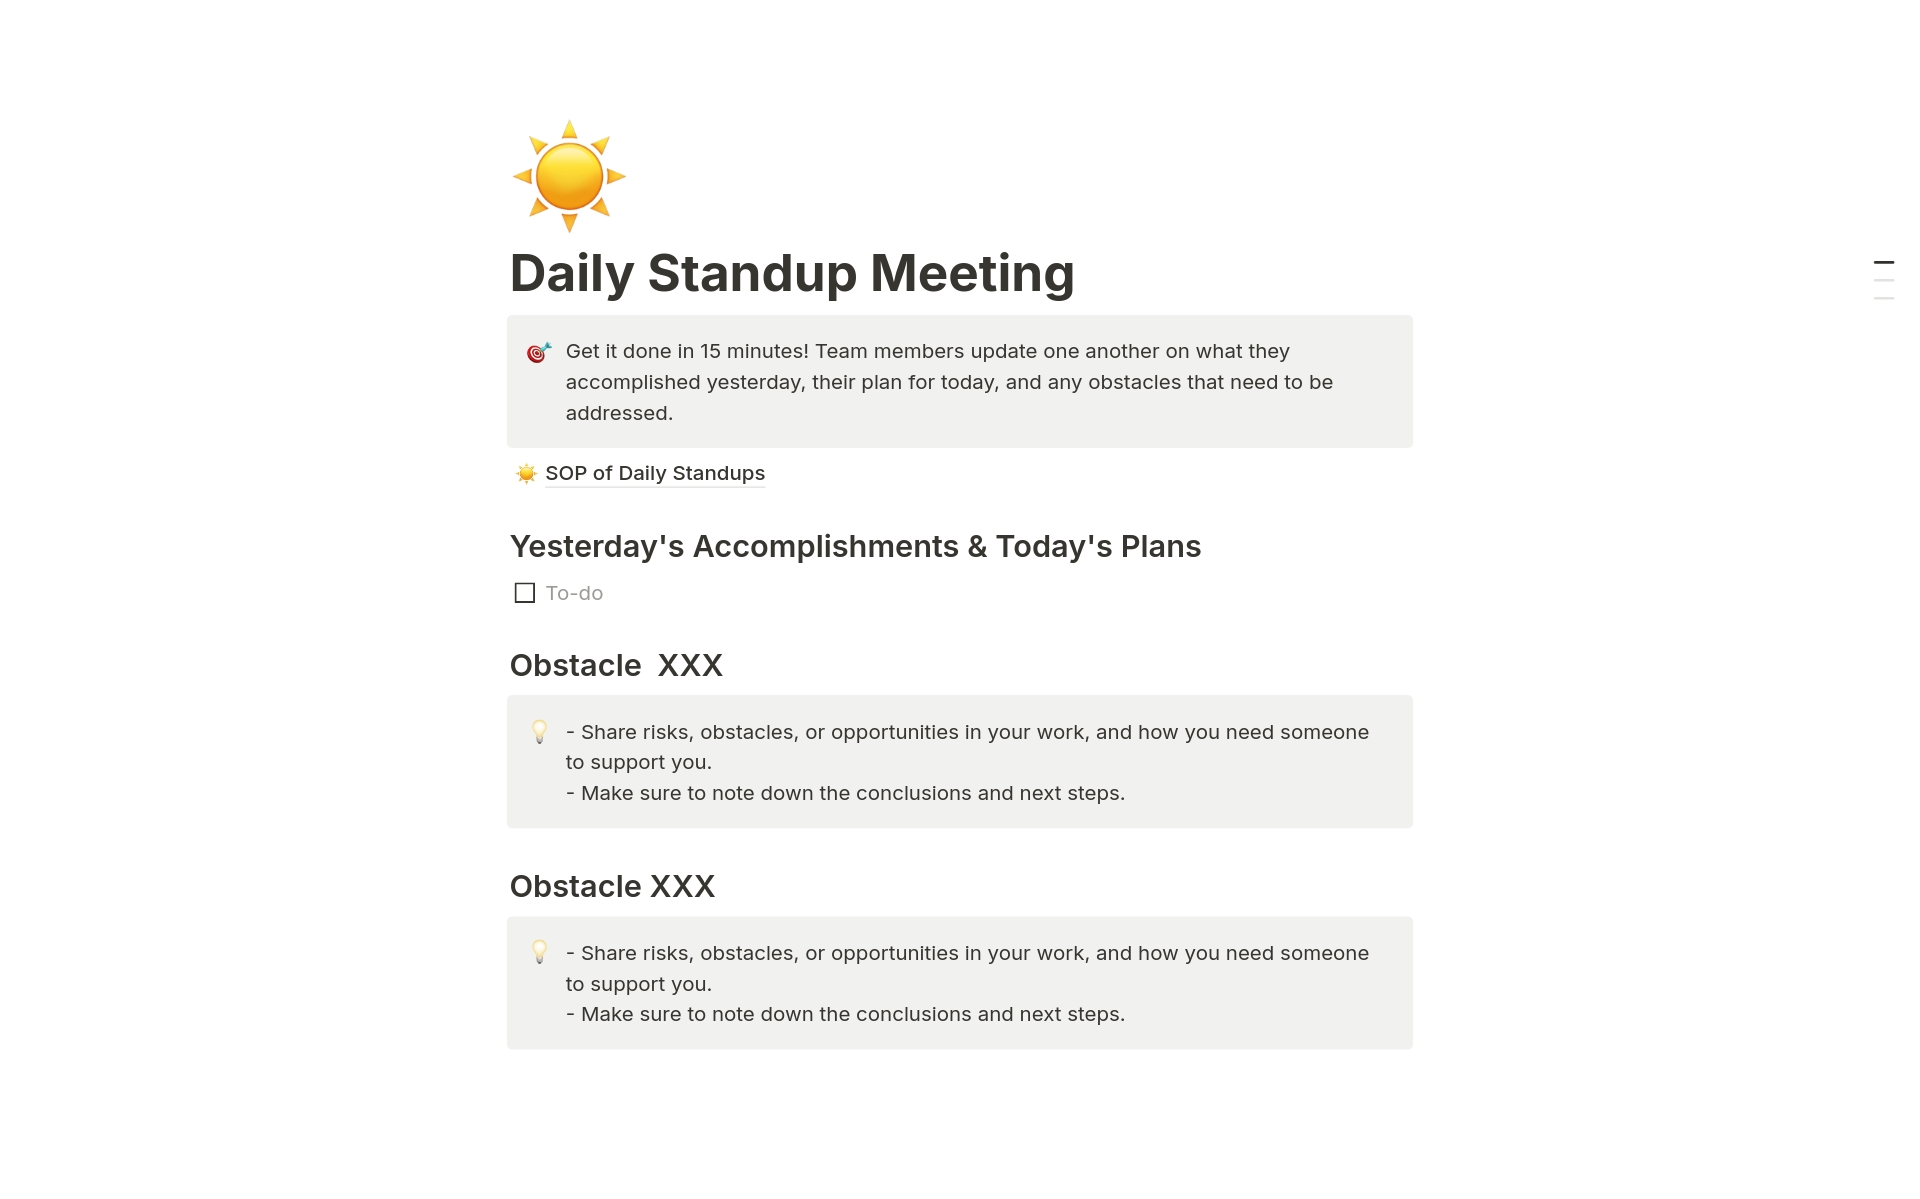 Vista previa de una plantilla para Daily Standup Meeting